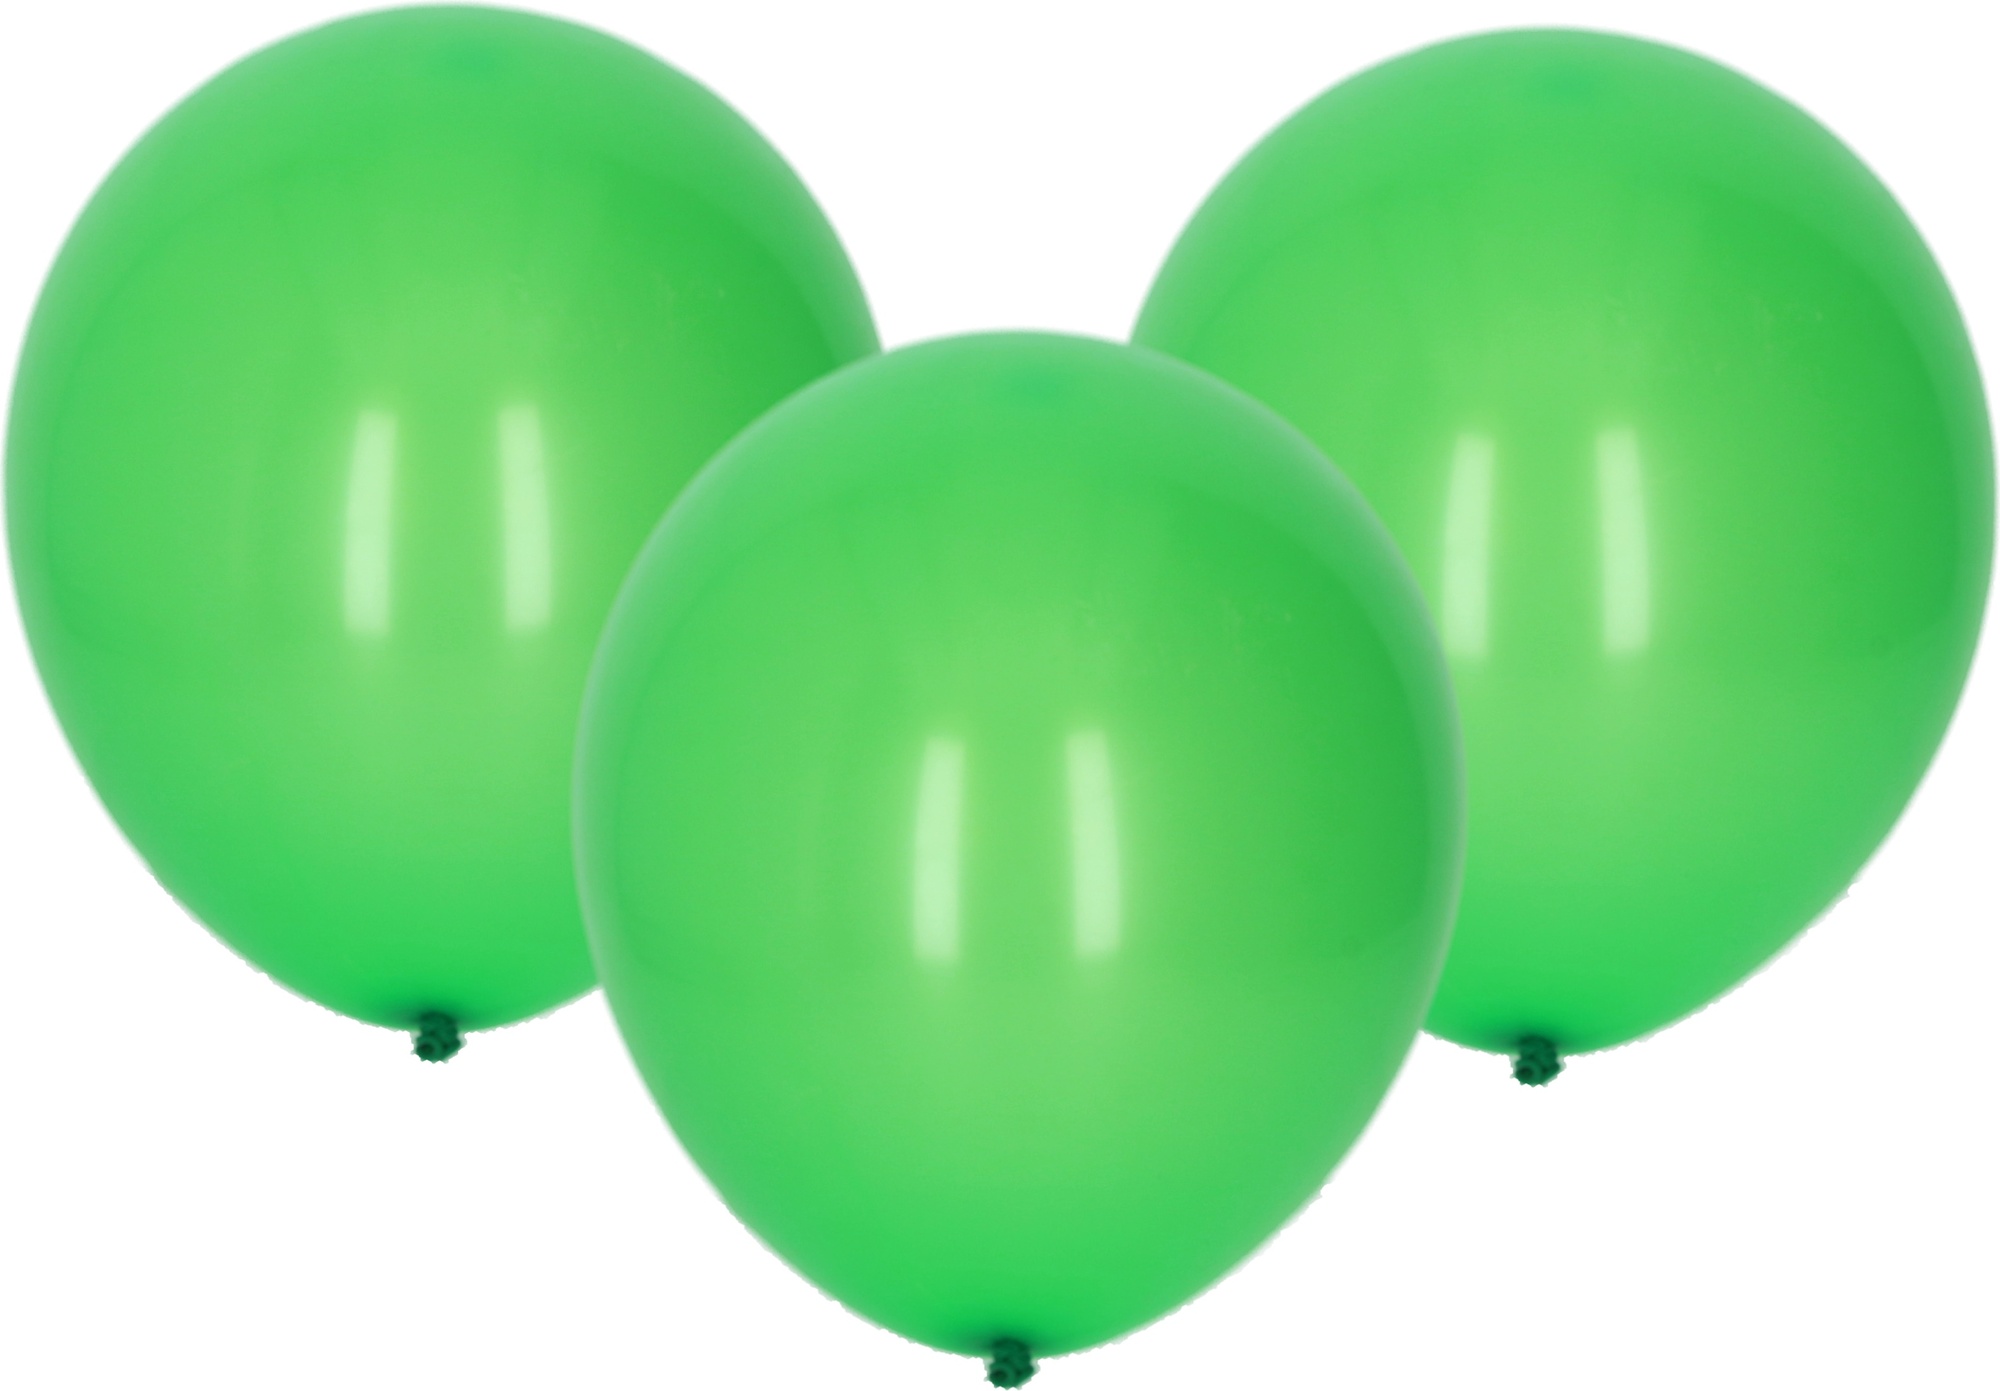 Balónek nafukovací 30cm - sada 10ks, zelený